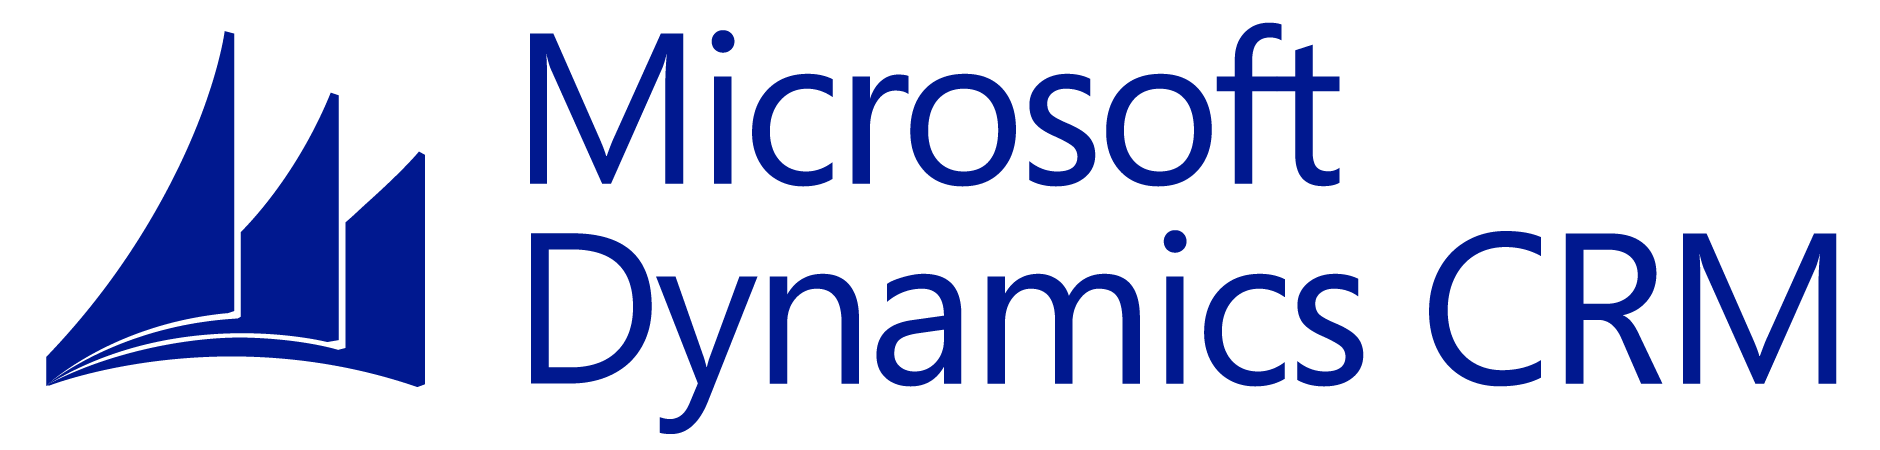 Dynamics CRM 365 Logo - Dynamics Logo Png Images